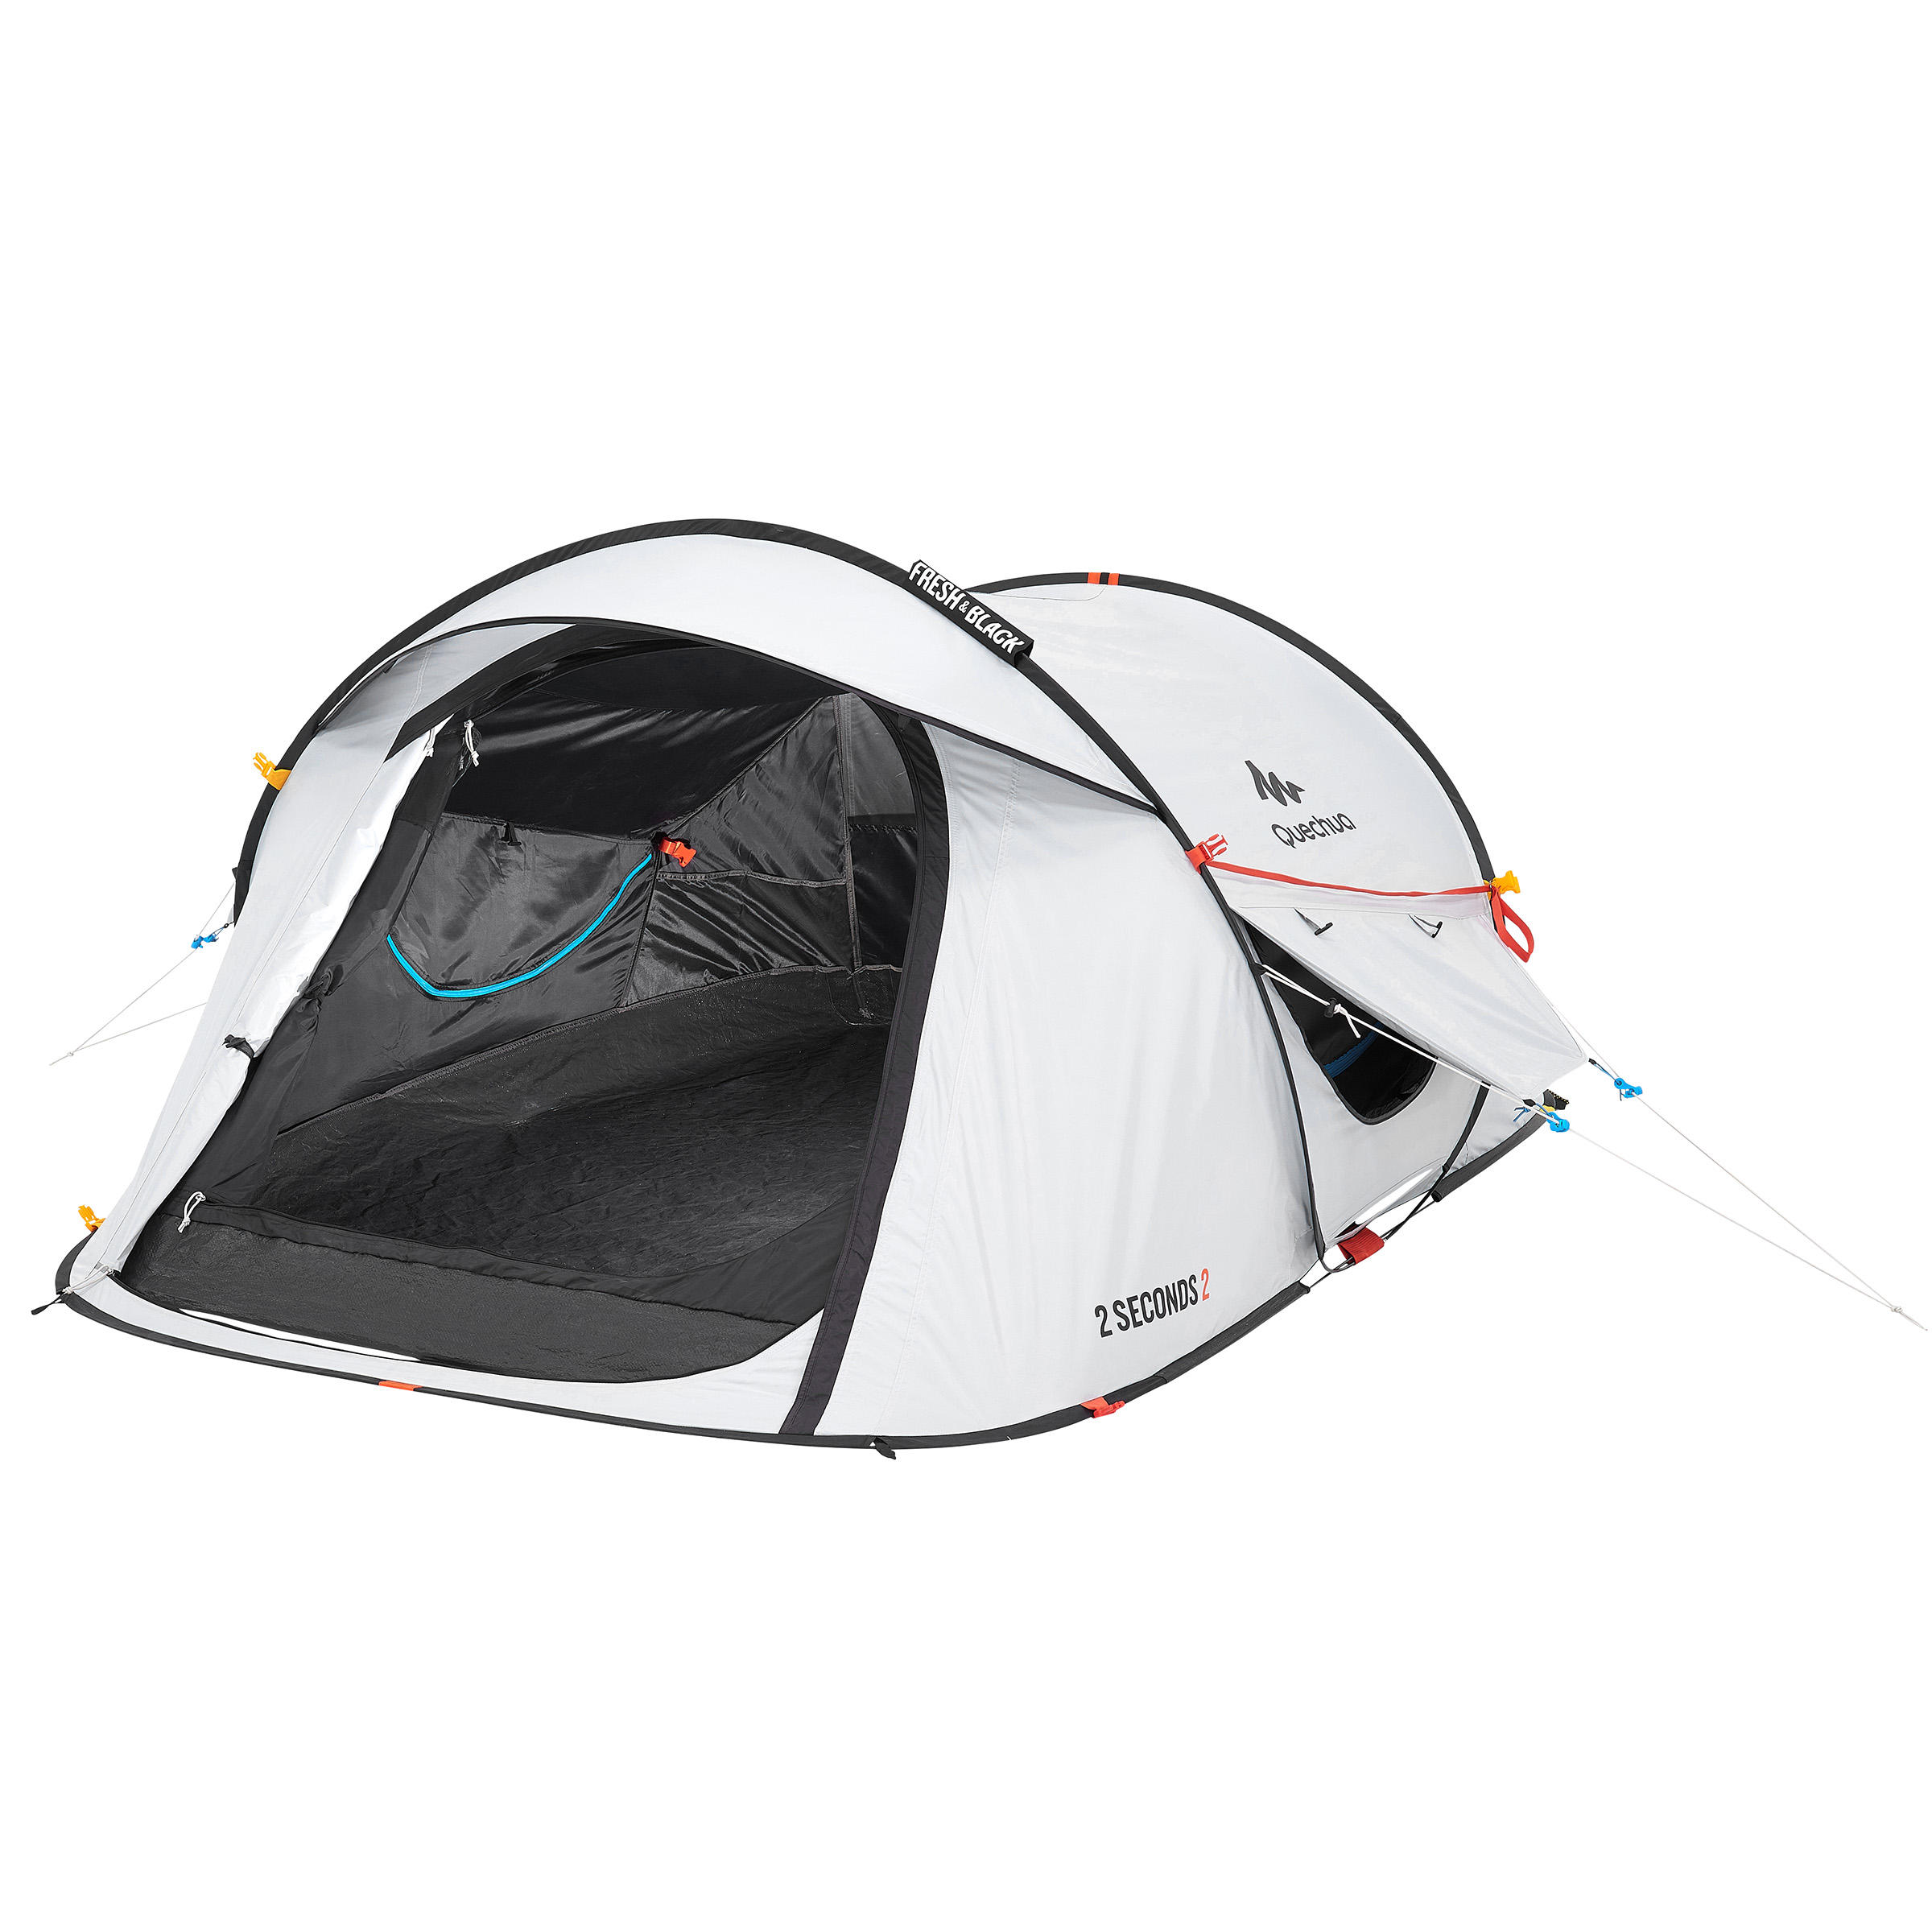 decathlon camping tent price